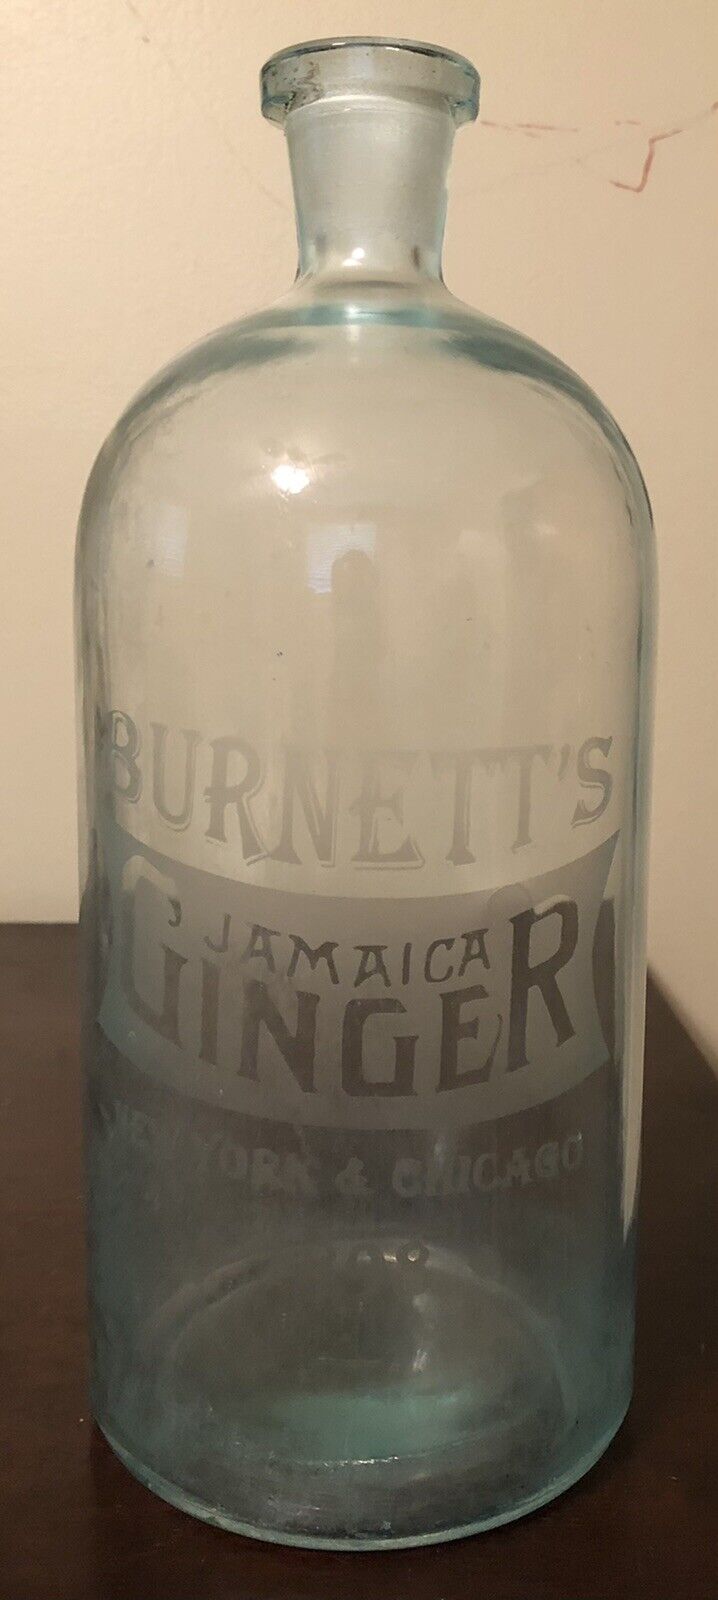 Antique Large Burnett's Jamaica Ginger Etched Glass Bottle 1898 New York Chicago